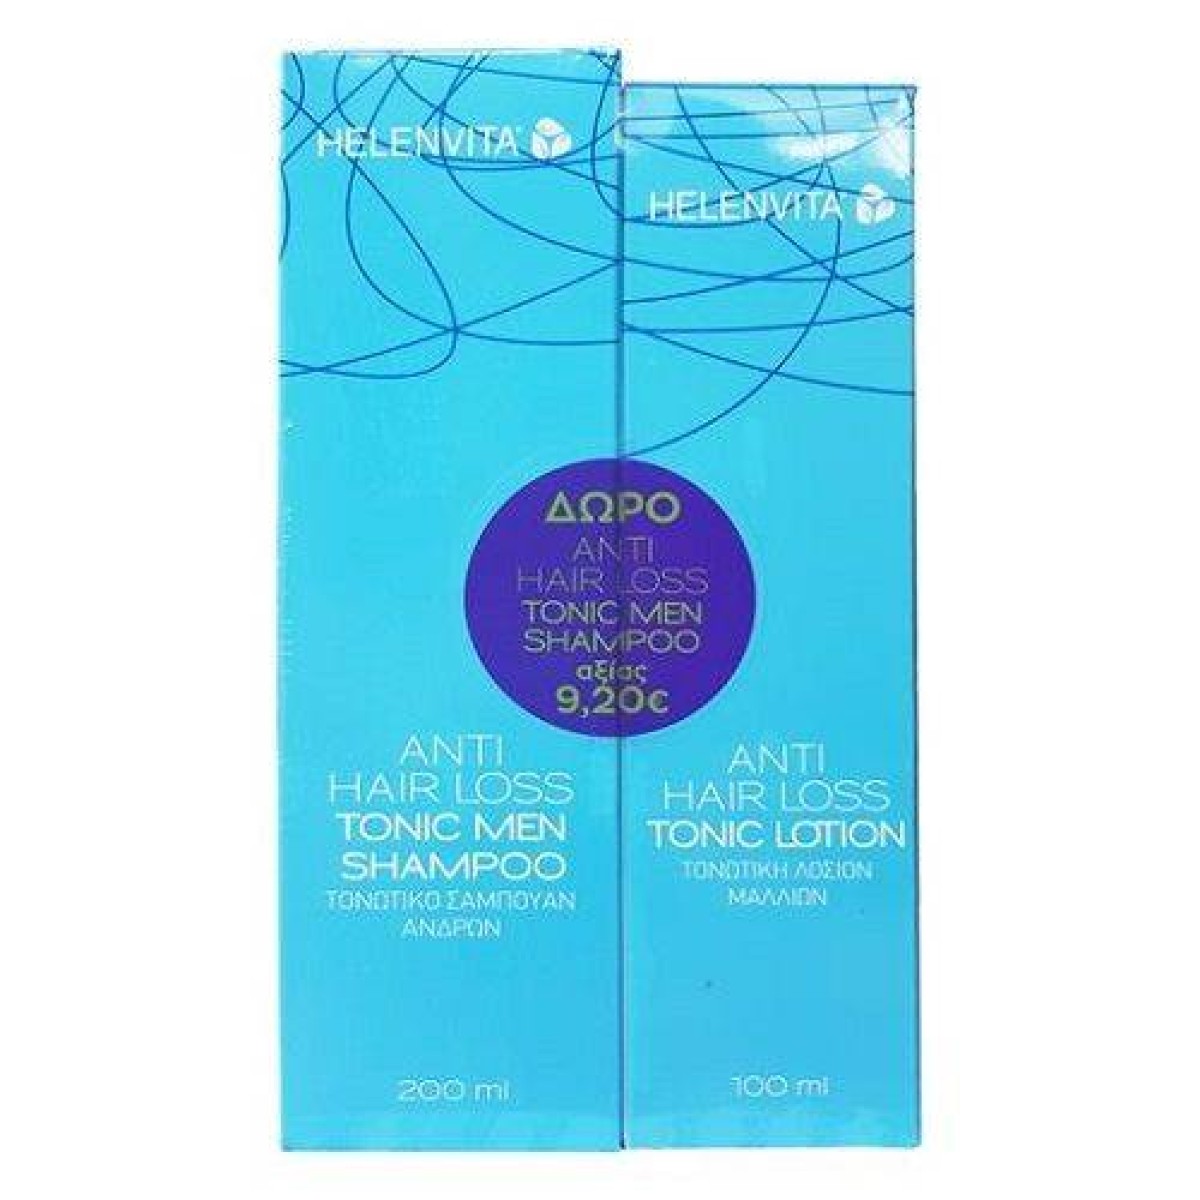 Helenvita | Anti Hair Loss Shampoo Lotion 100ml + Δώρο Anti Hair Loss Tonic Men Shampoo 200ml